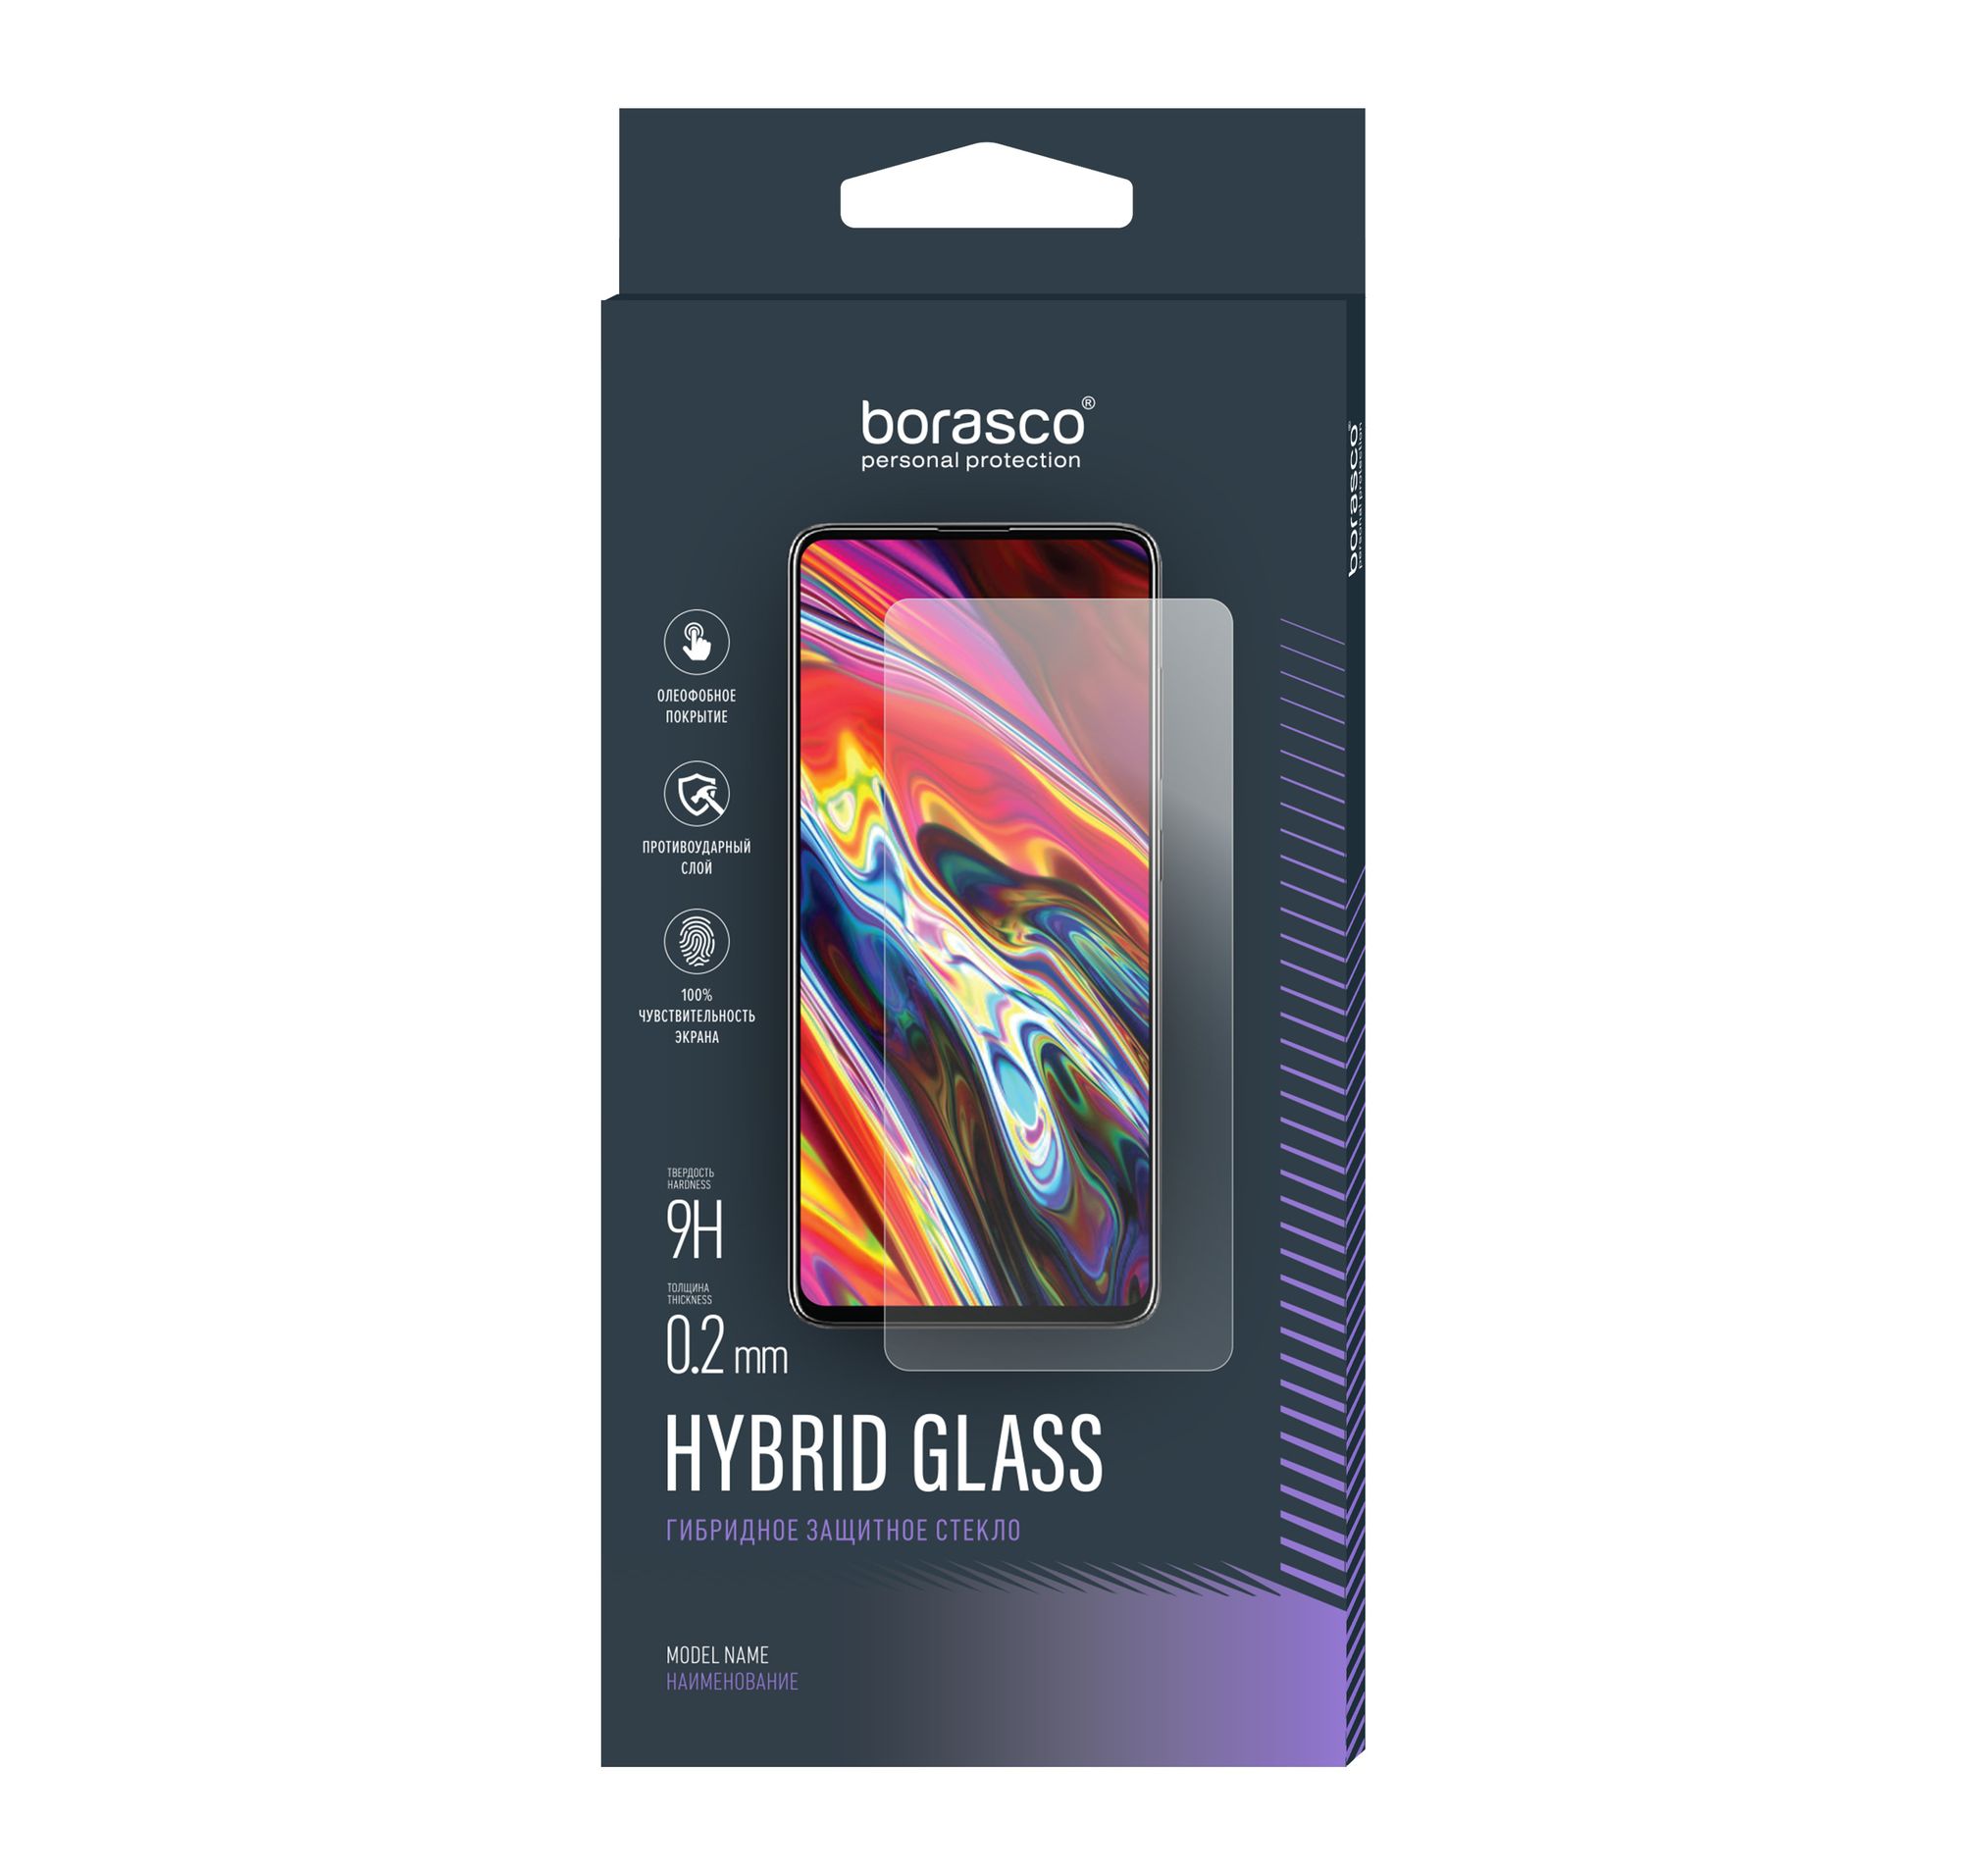 Стекло защитное Hybrid Glass VSP 0,26 мм для iPhone 6 Plus/6S Plus защитное стекло deppa 61998 3d для apple iphone 6 6s plus 0 3 мм белое